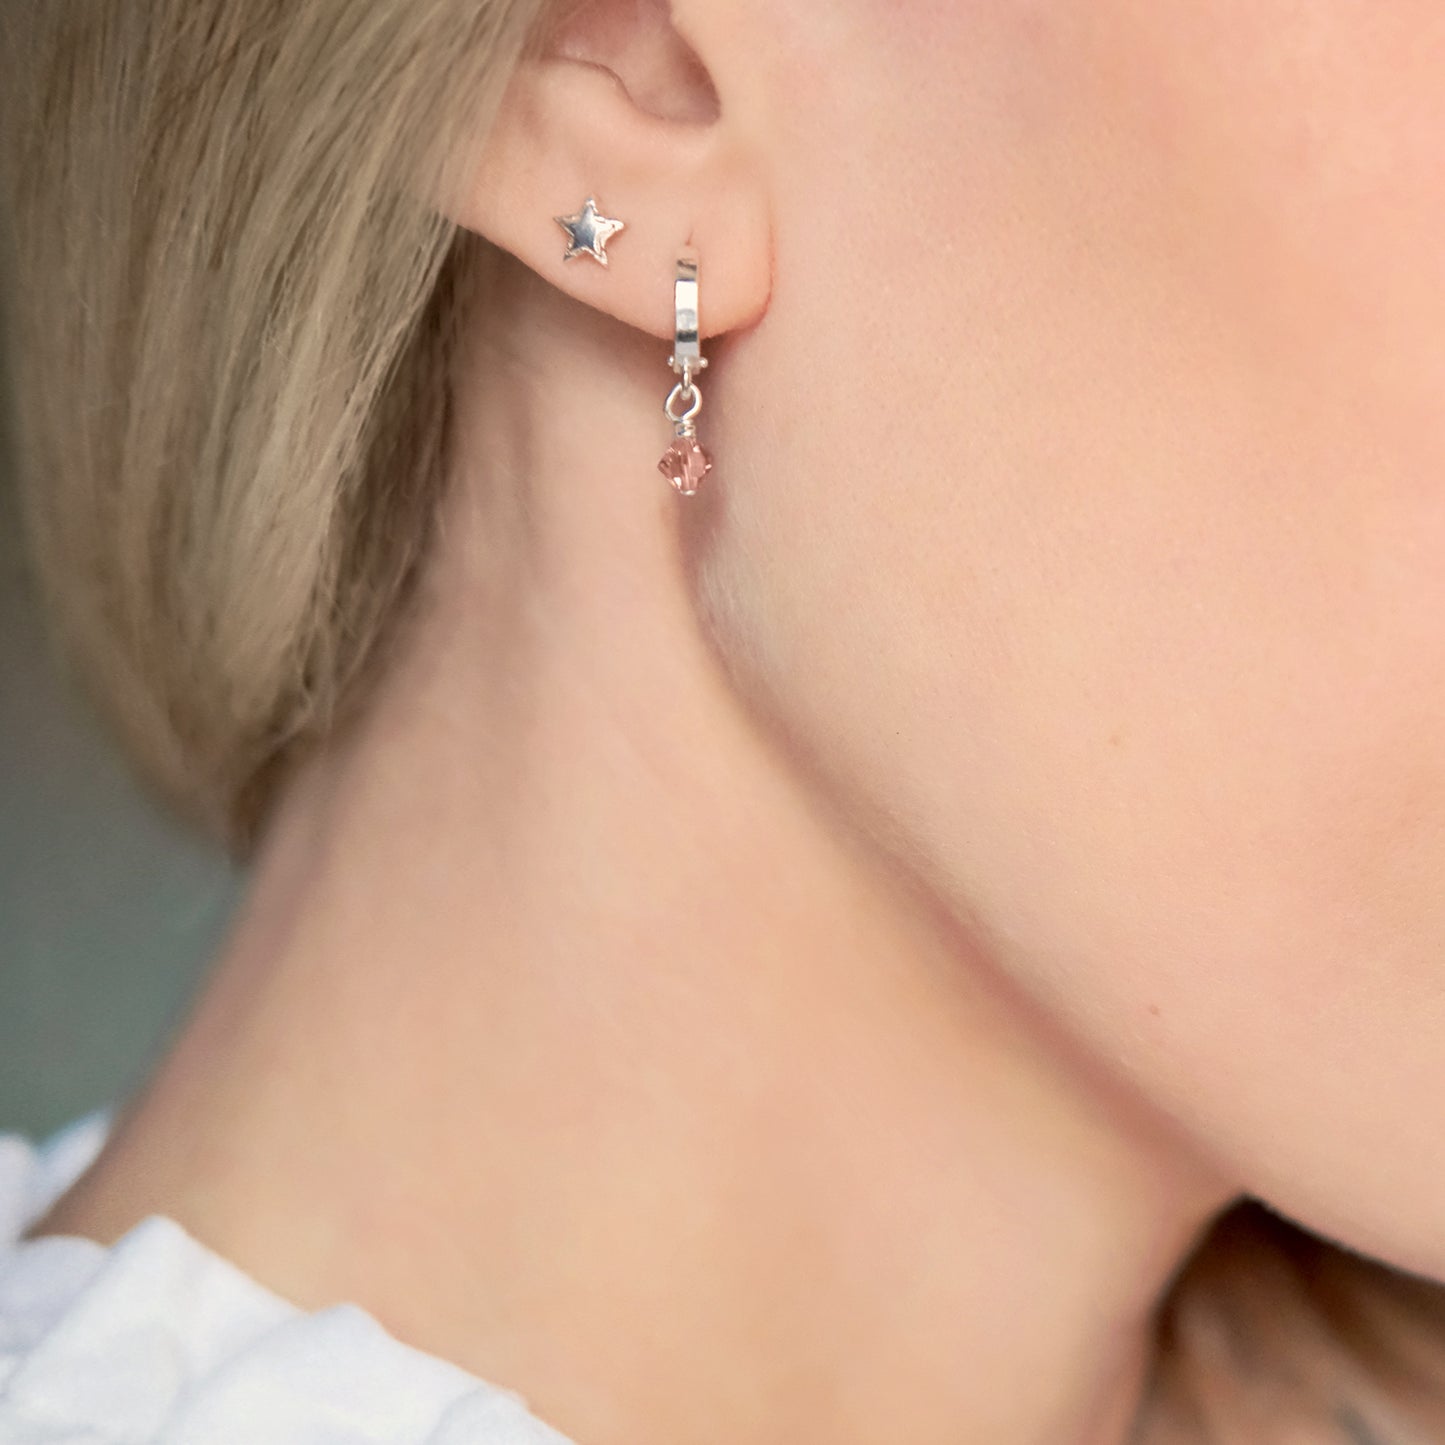 Star Stud Earrings - Sterling Silver